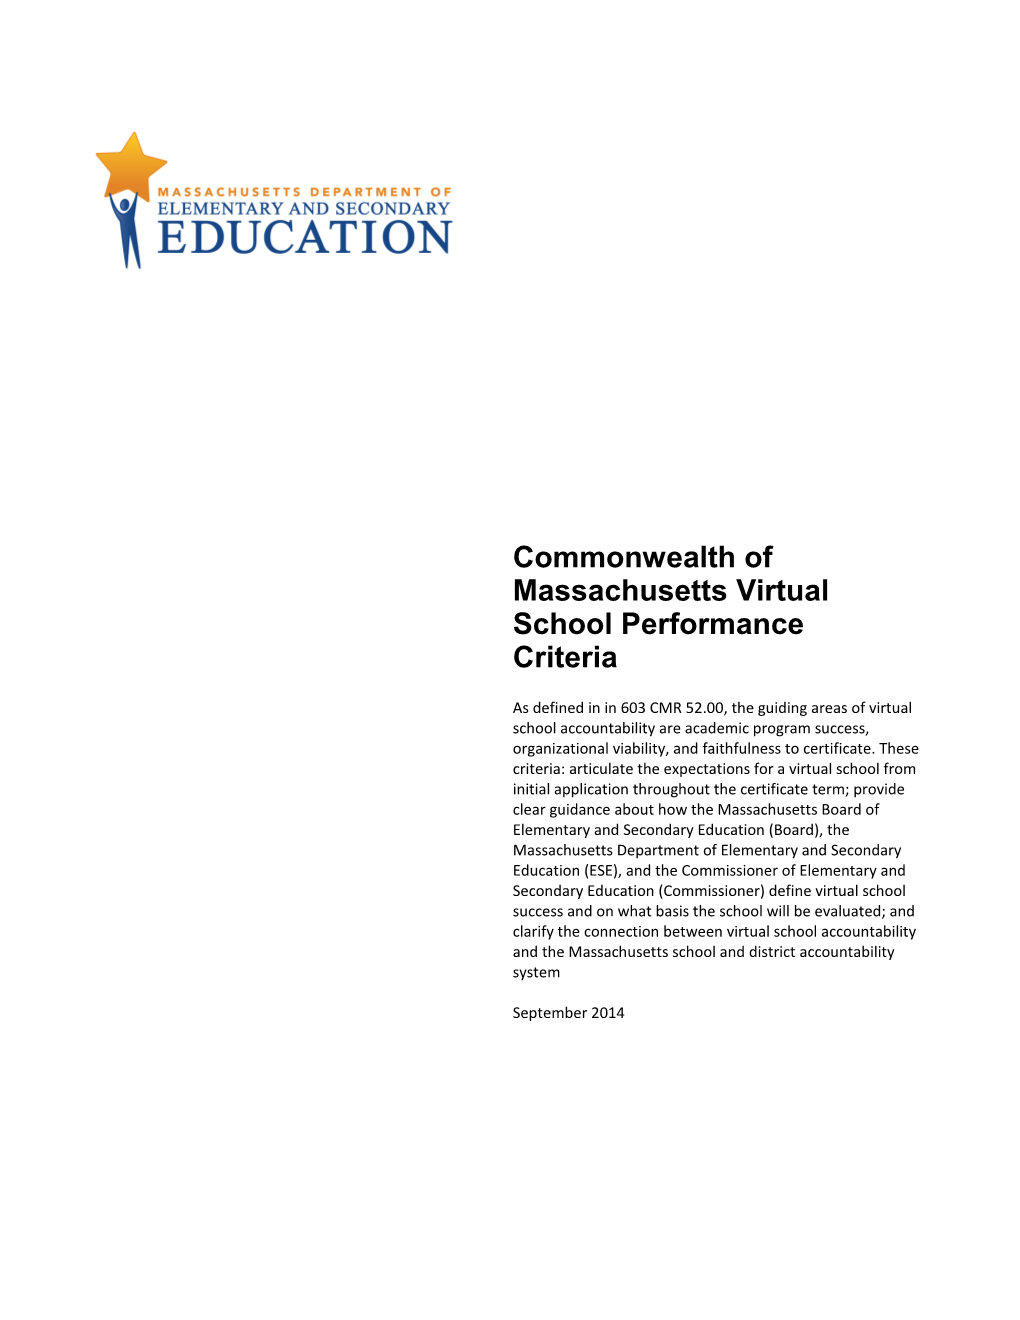 Commonwealth of Massachusetts Virtual School Performance Criteria, October 2014